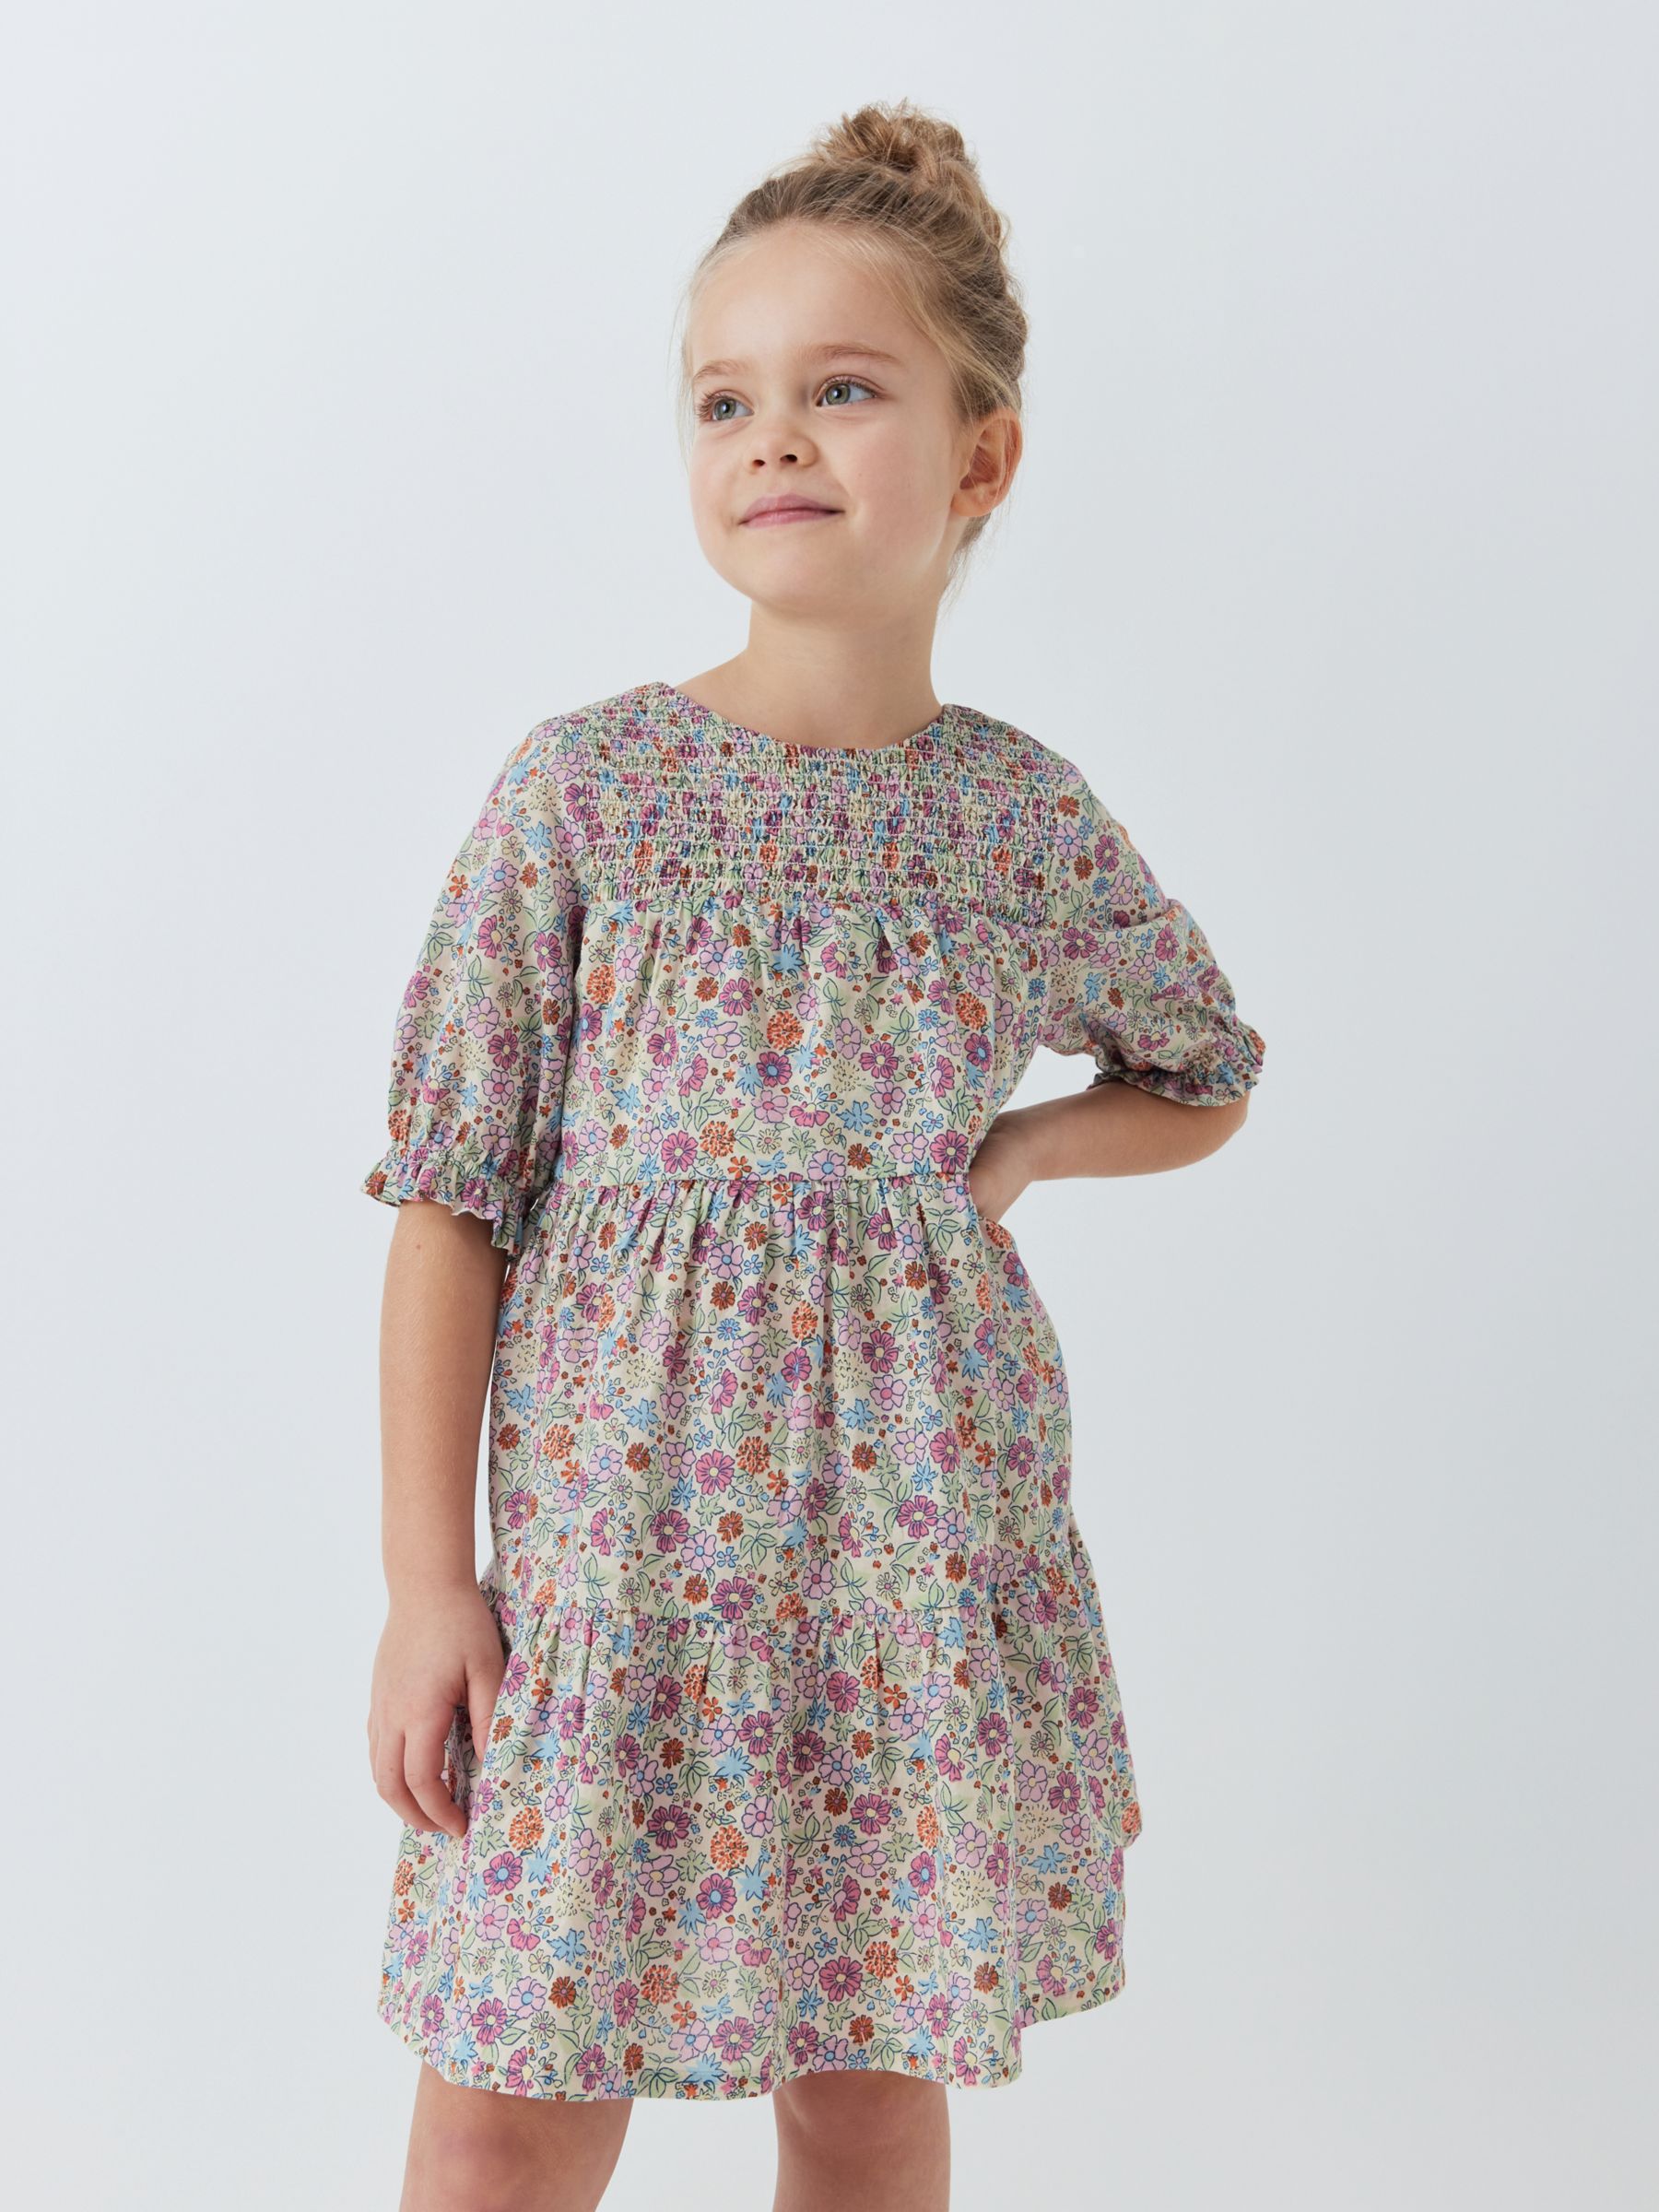 John Lewis Kids' Ditsy Floral Tiered Dress, Multi at John Lewis & Partners